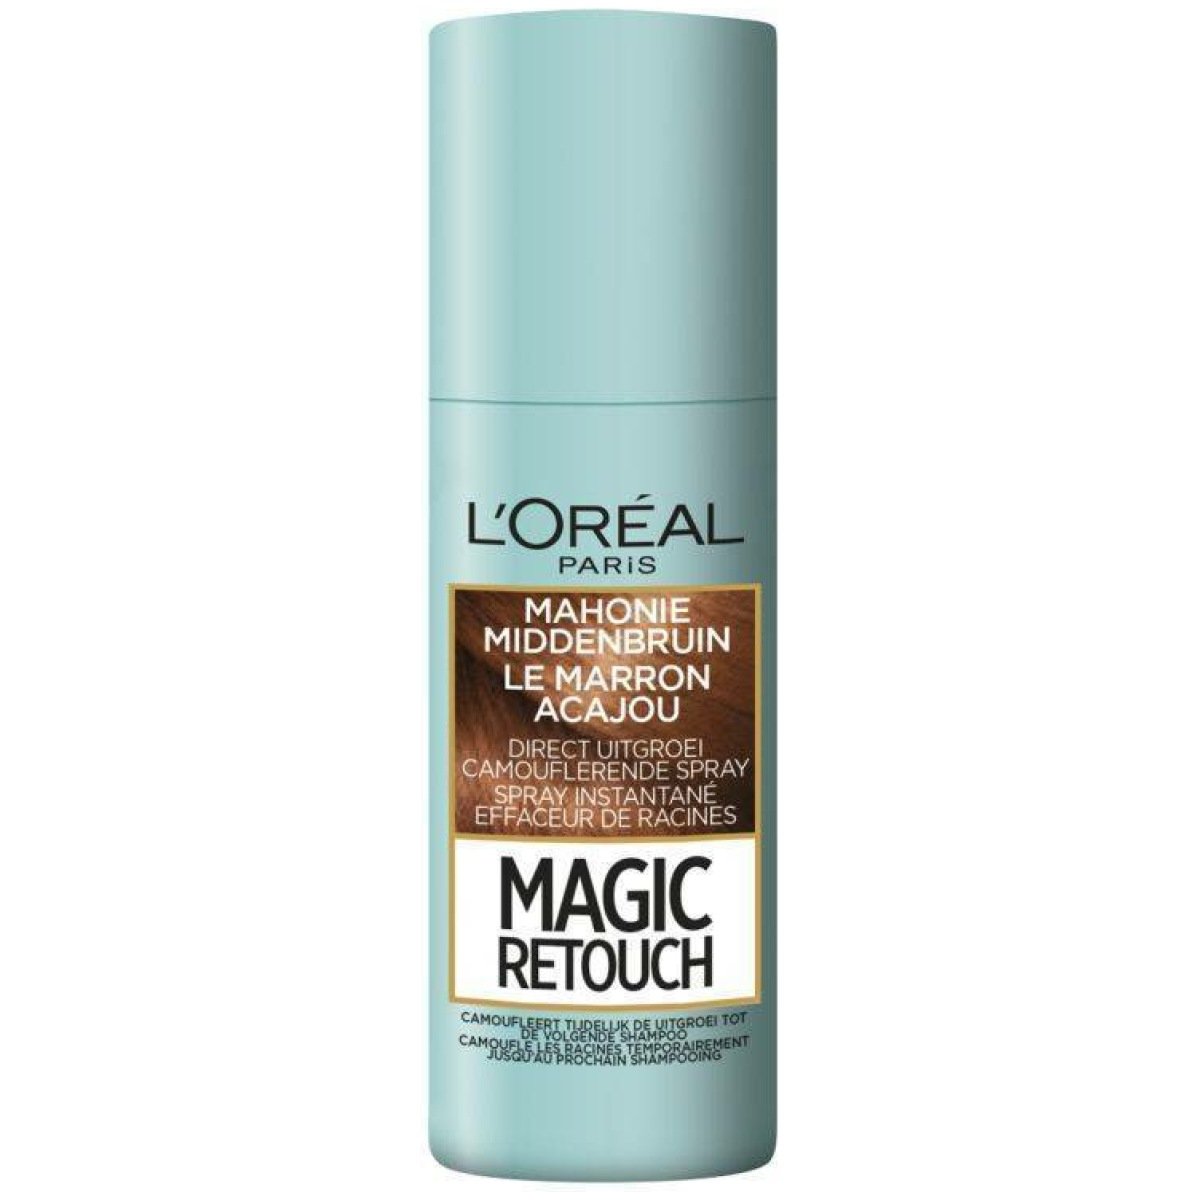 L'Oreal Magic Retouch Mahonie Middenbruin Spray 75ml